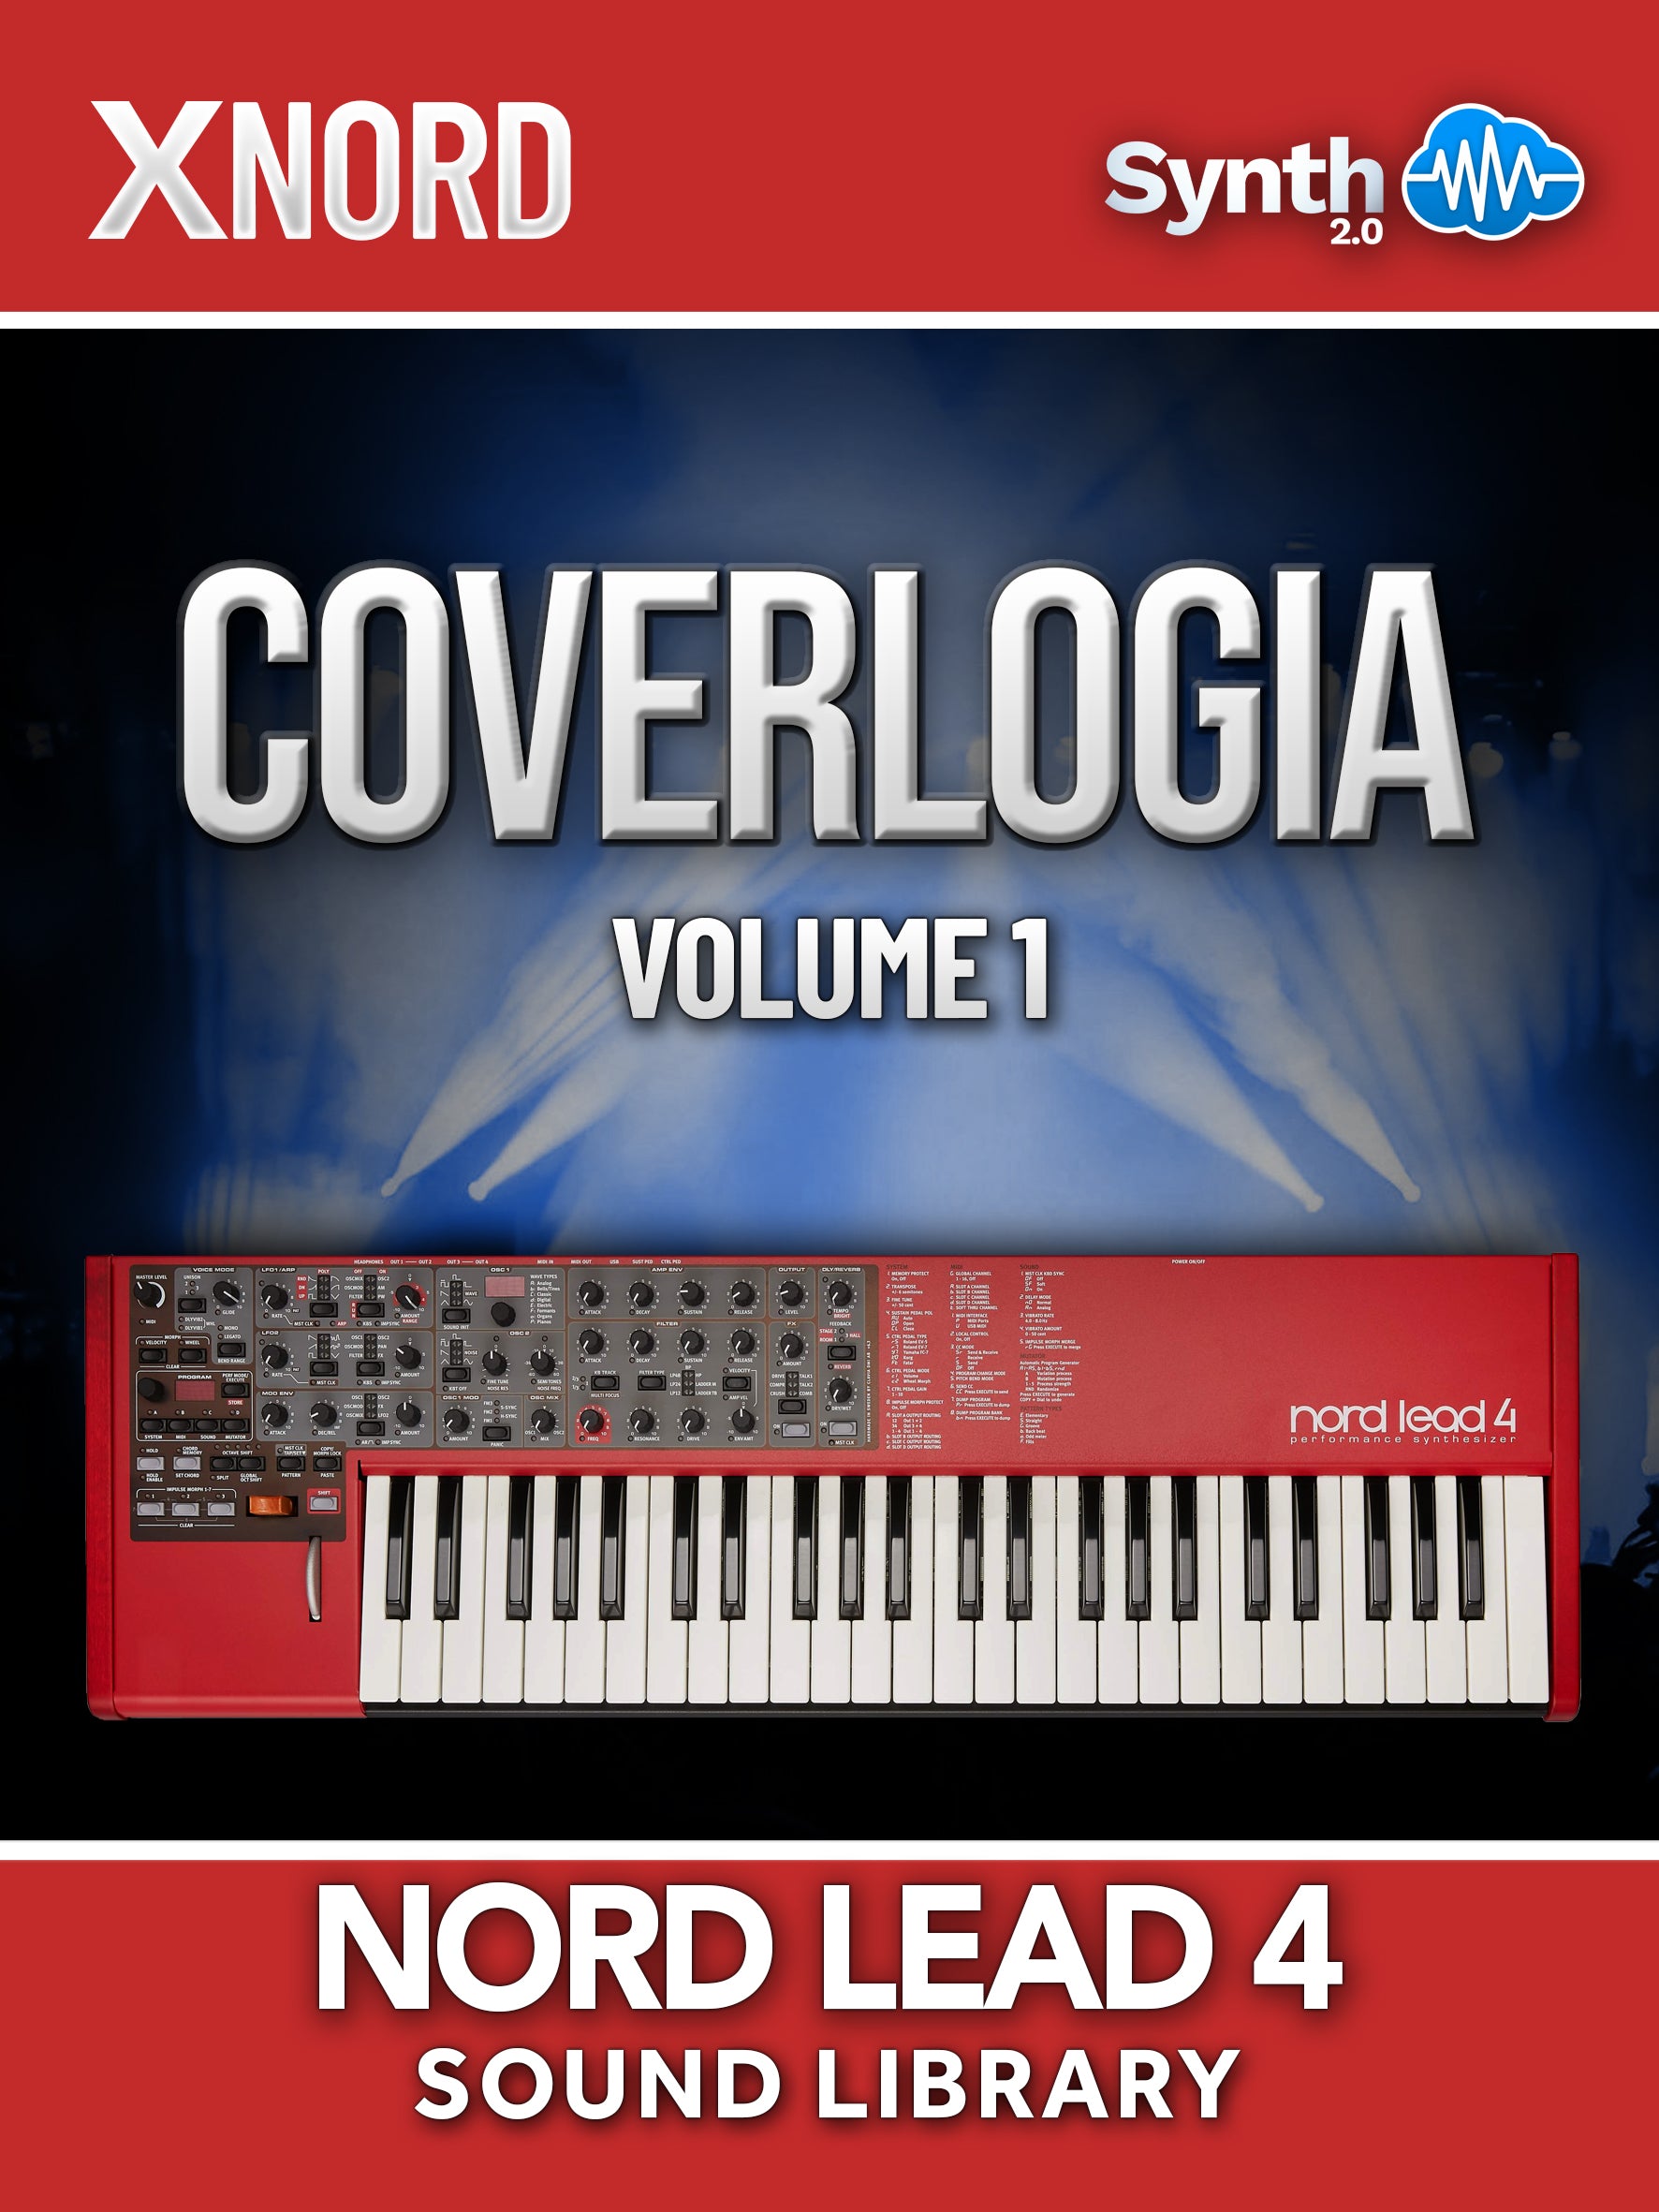 FPL028 - Coverlogia Vol.1 - Nord Lead 4 / Rack ( 31 presets )